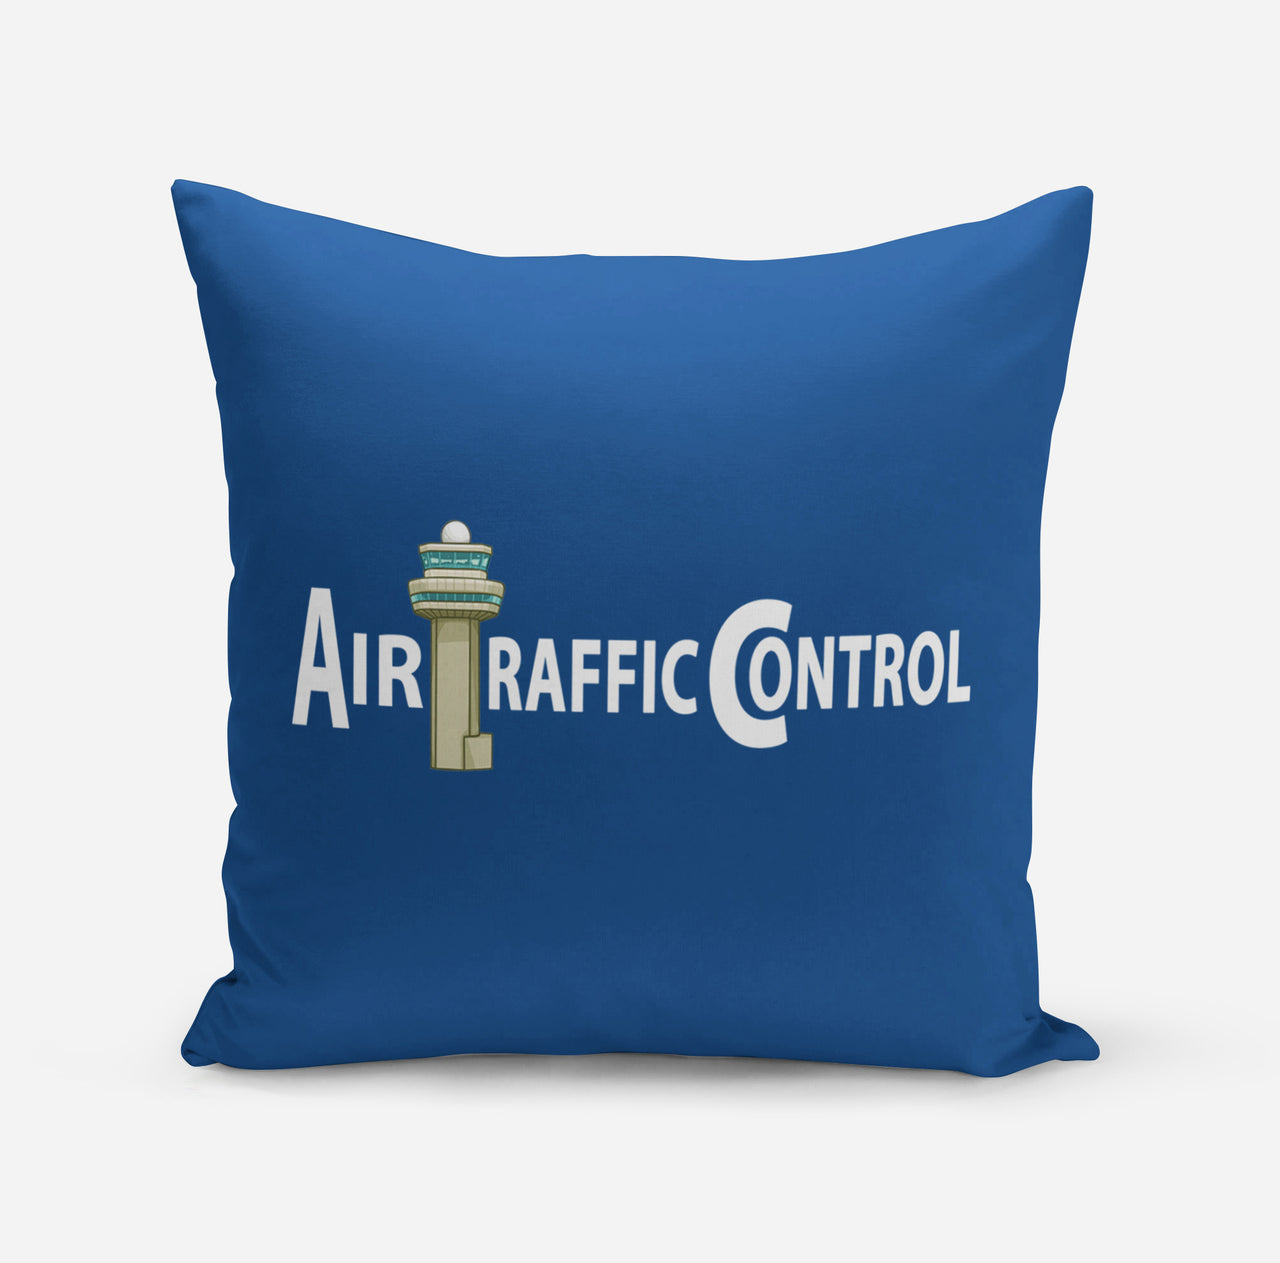 Air Traffic Control Designed Pillows